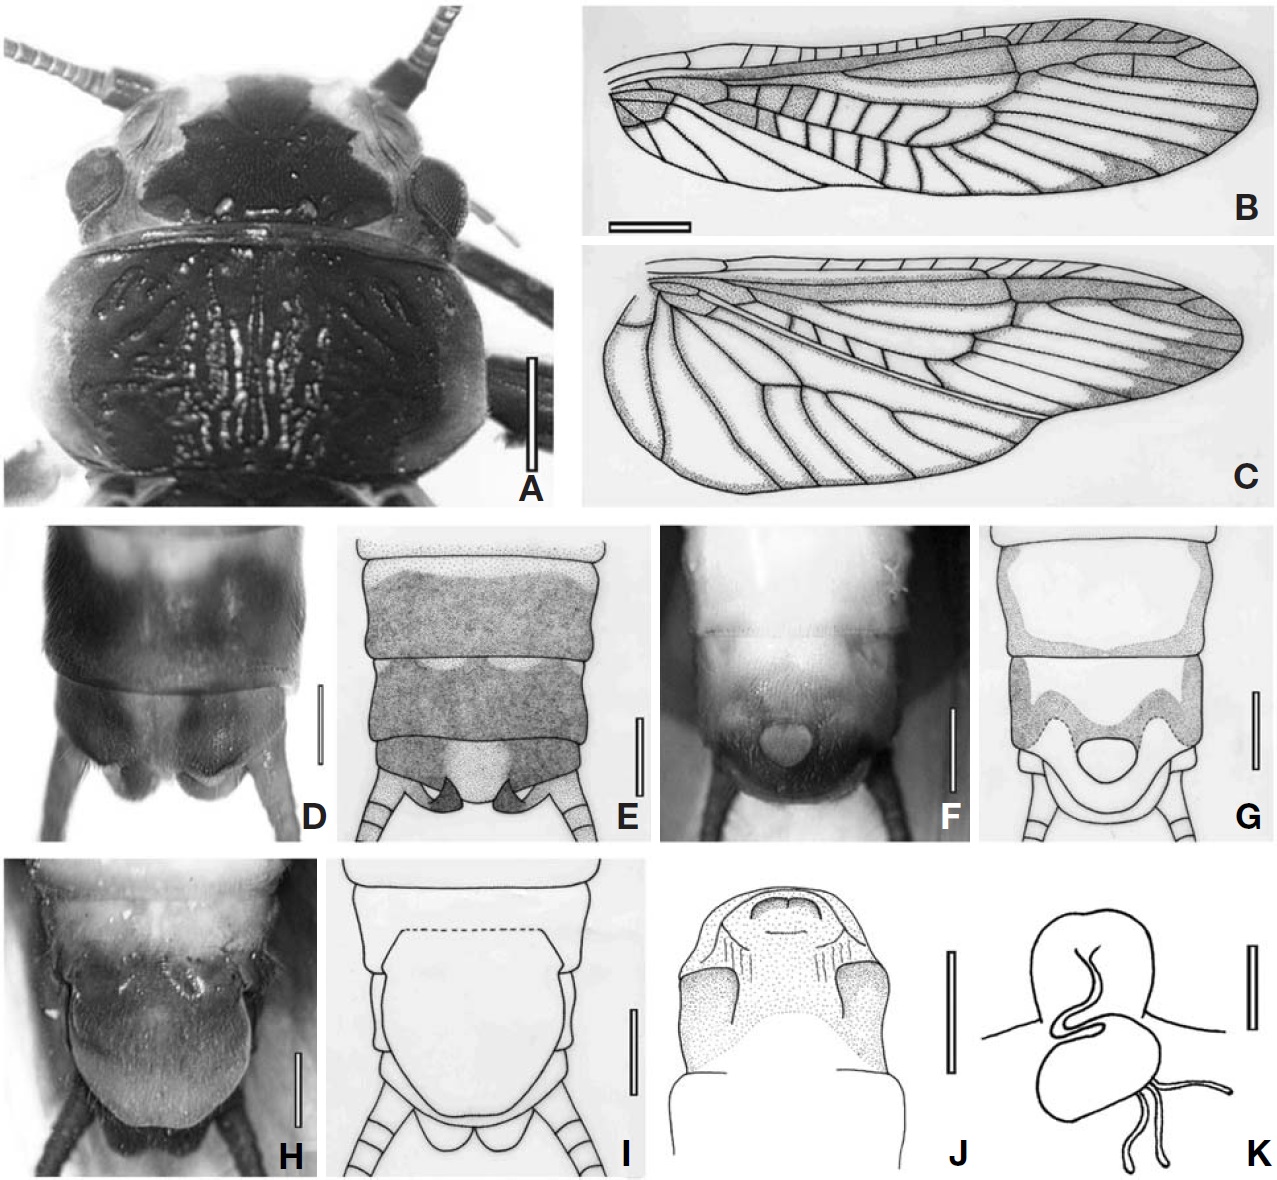 Brahmana flavomarginata Wu, adult. A, Male head and pronotum; B, C, Male forewing and hindwing; D, E, Male dorsal terminalia; F, G, Male ventral terminalia; H, I, Female ventral terminalia; J, Everted aedeagus, dorsal view; K, Female vagina. Scale bars: A=1 mm, B, C=2 mm, D-K=0.5 mm.